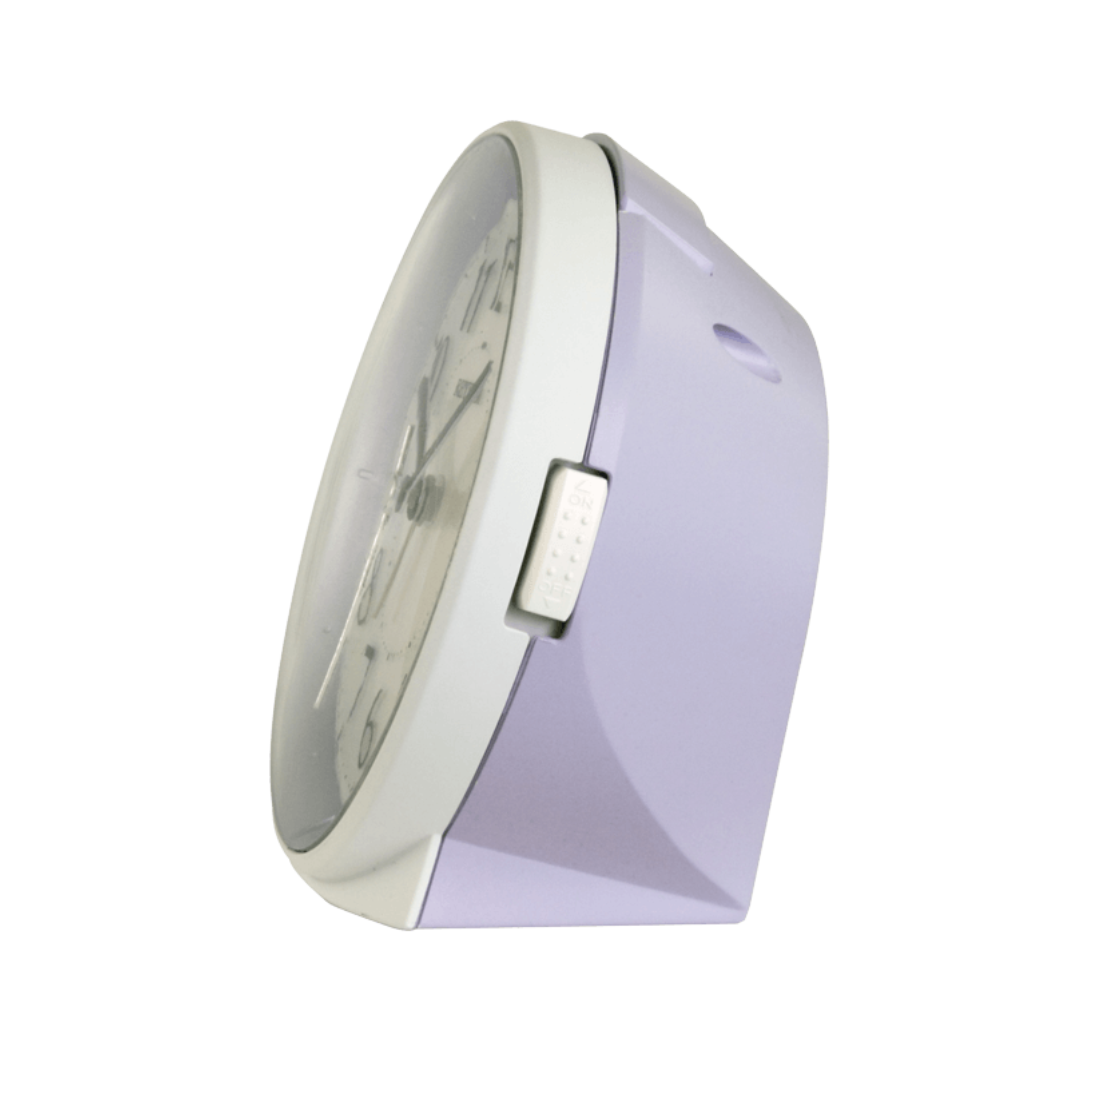 (Singapore Only) 8RE669SR12 Rhythm Beep Alarm Purple Clock